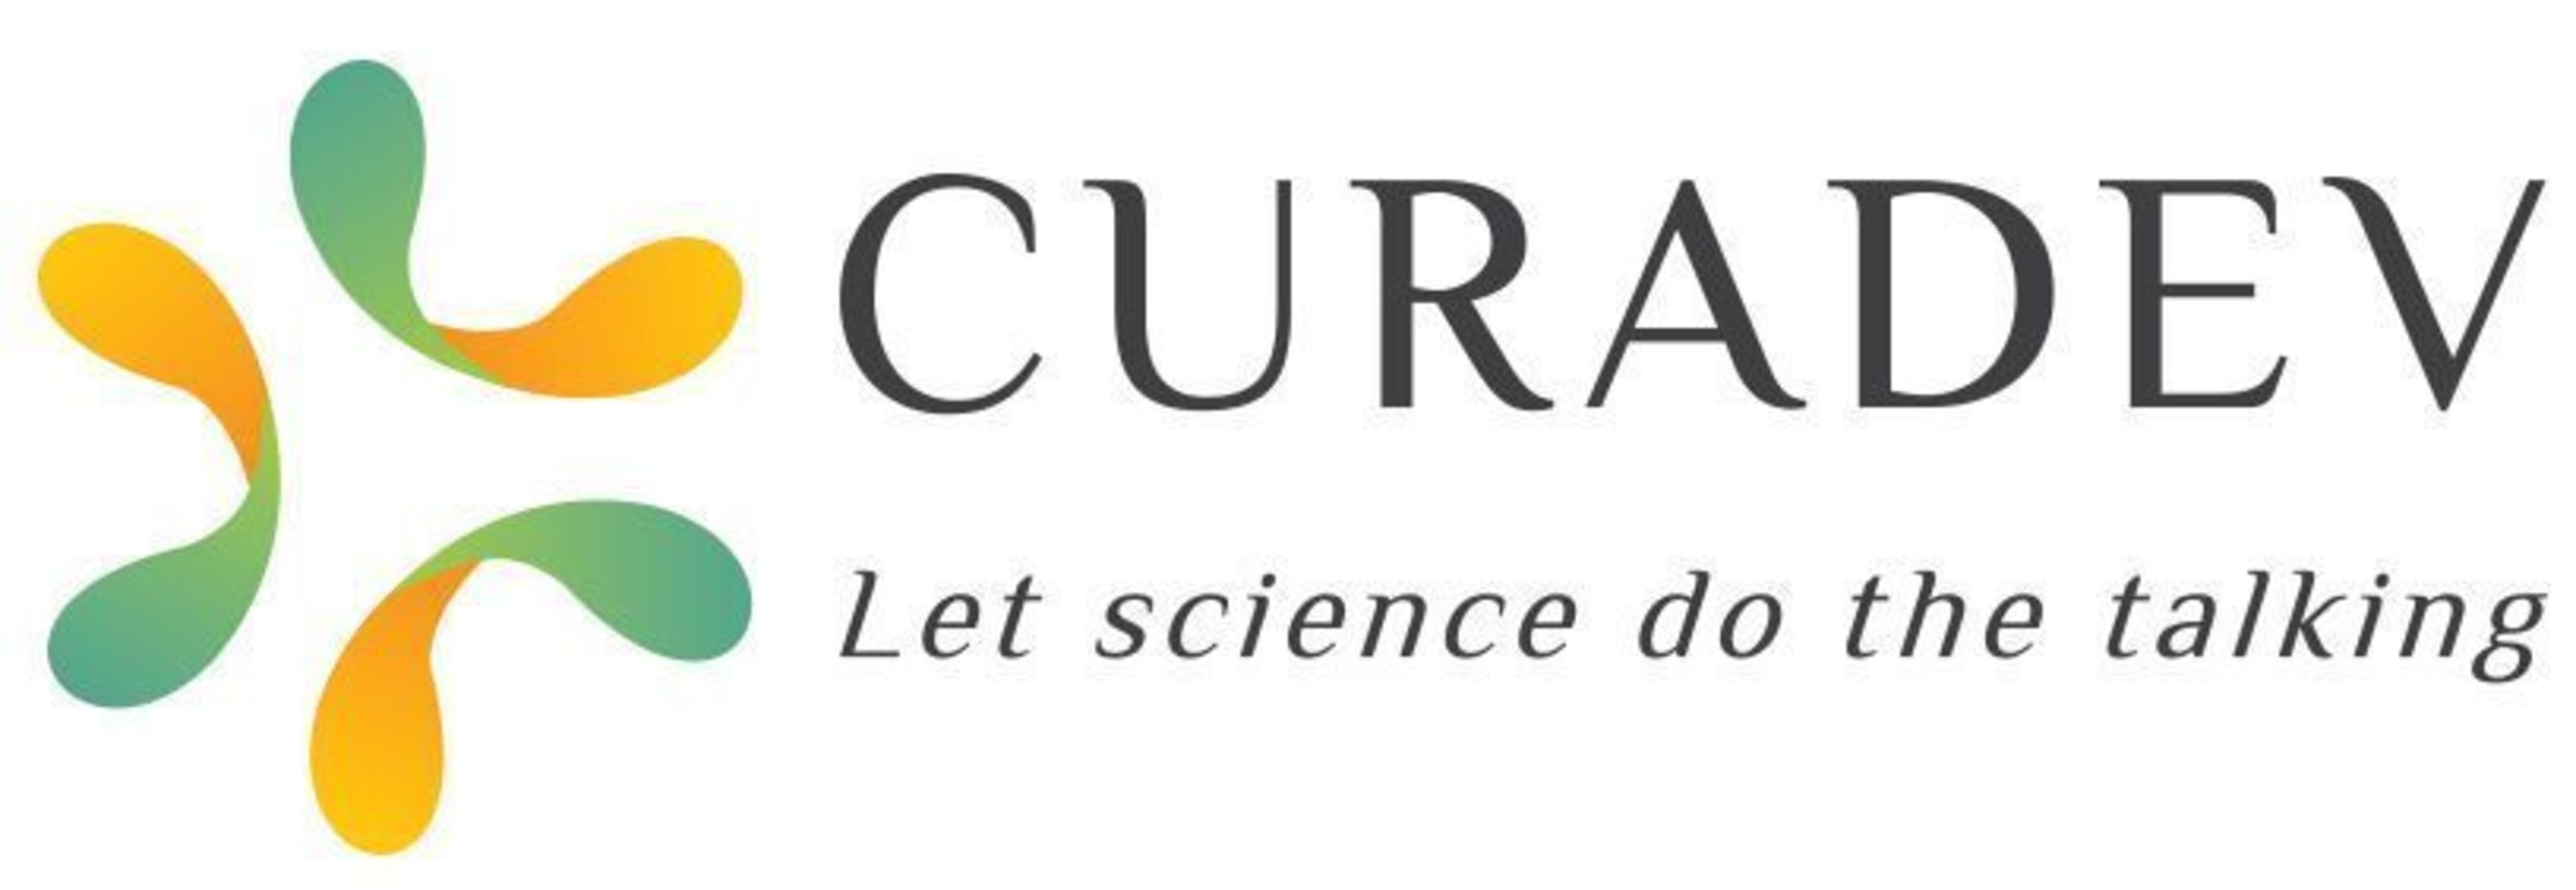 Curadev Logo (PRNewsFoto/Curadev)